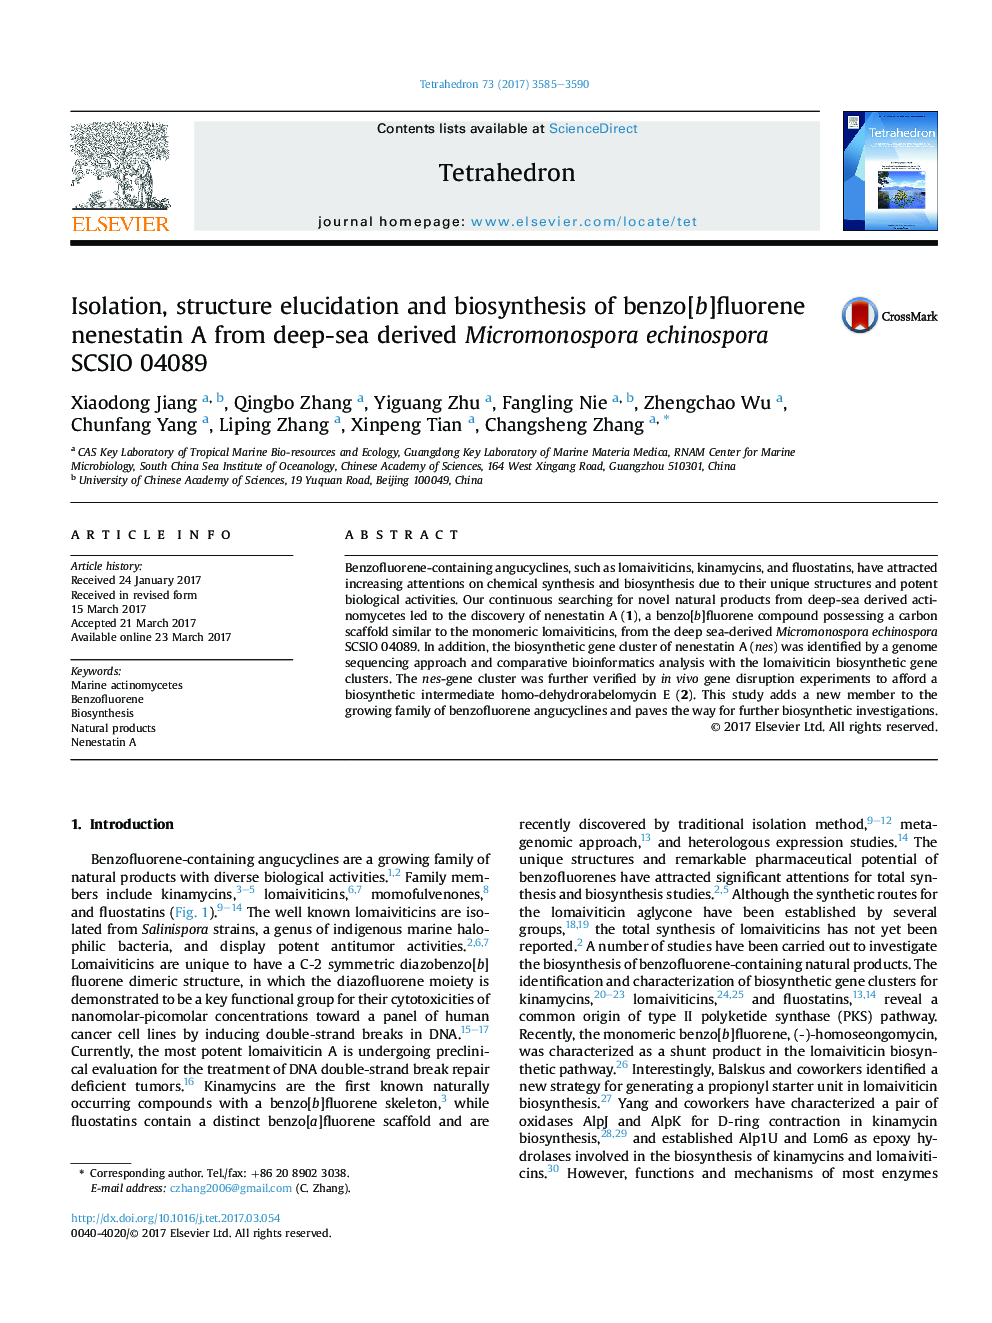 Isolation, structure elucidation and biosynthesis of benzo[b]fluorene nenestatin A from deep-sea derived Micromonospora echinospora SCSIO 04089